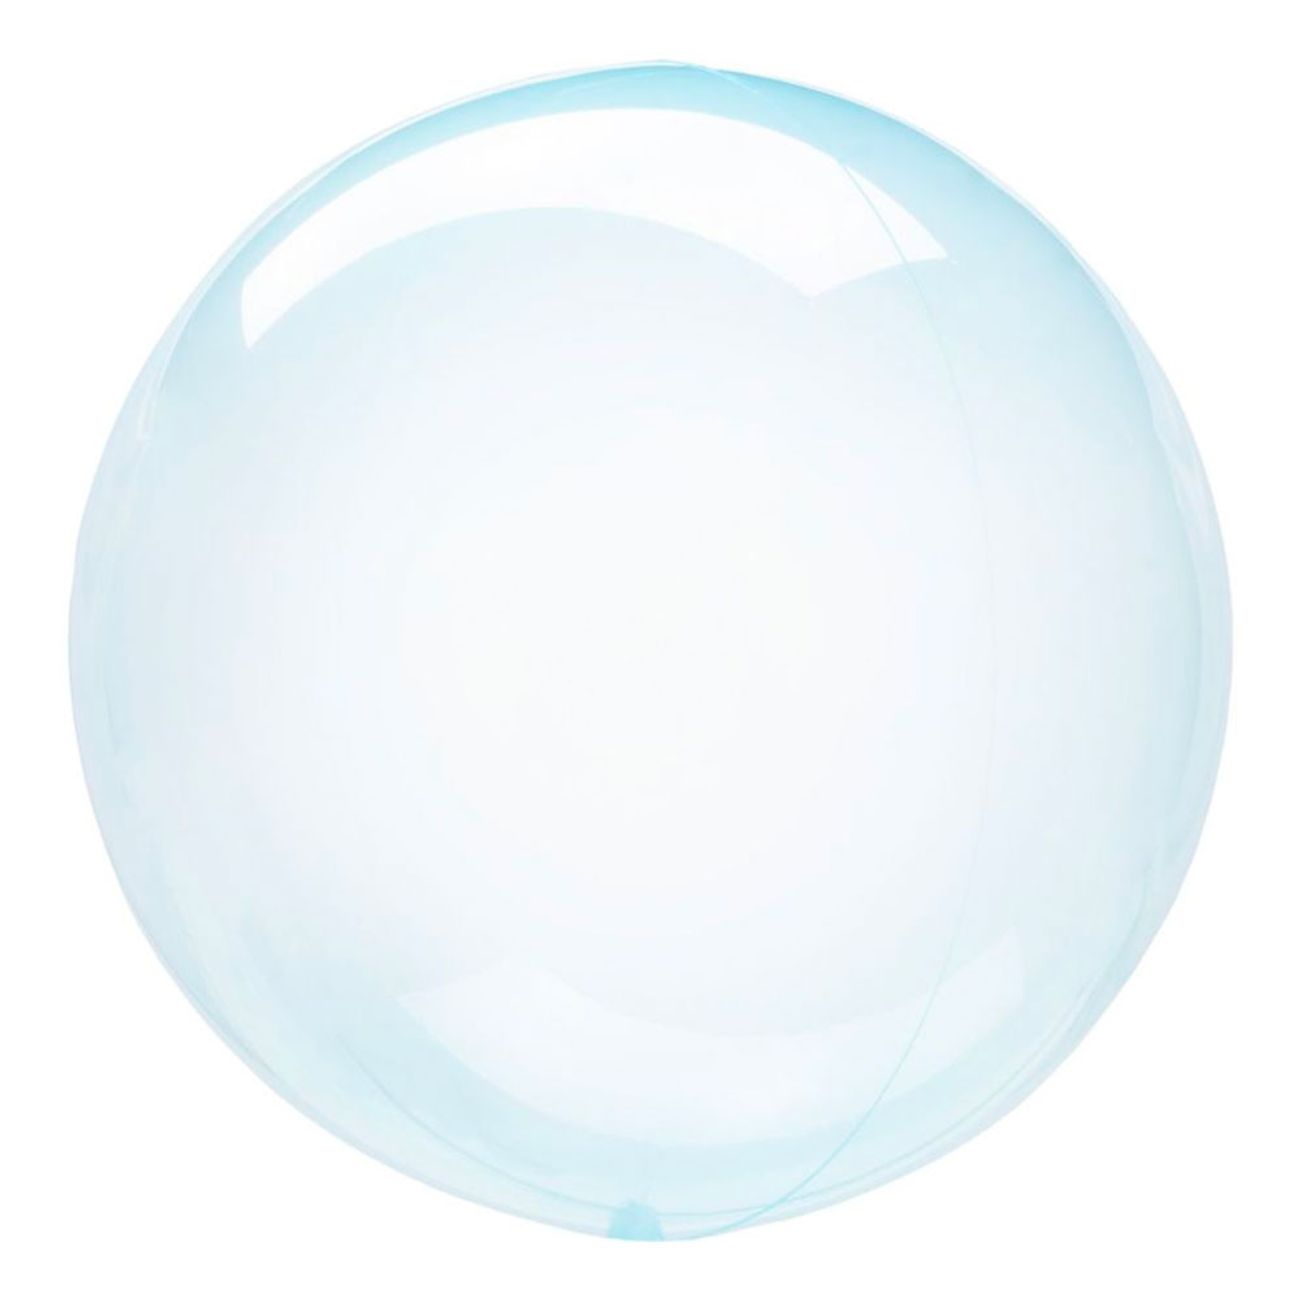 klotballong-bla-transparent-73095-1